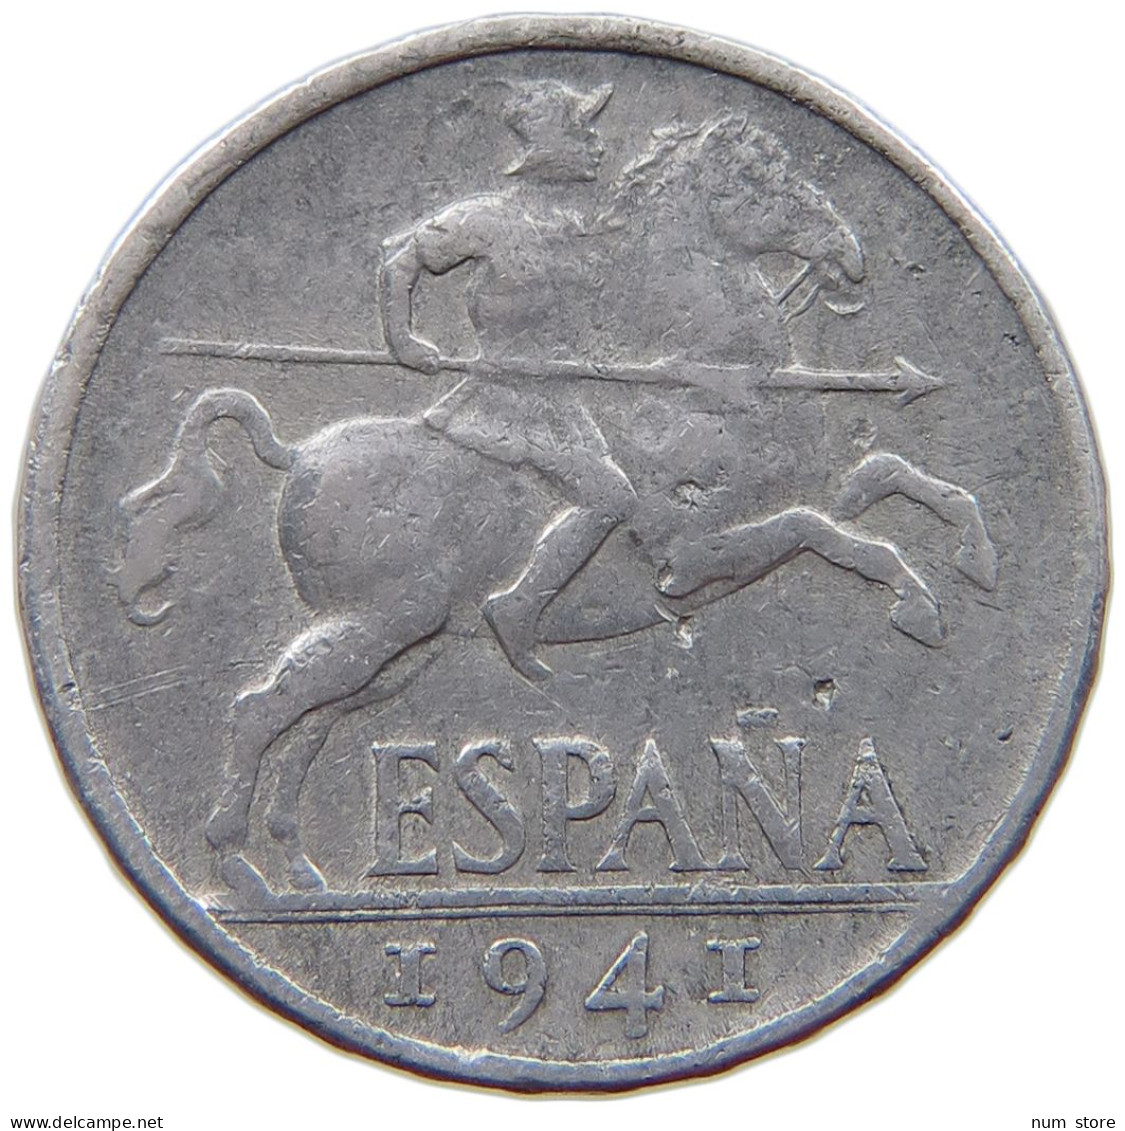 SPAIN 10 CENTIMOS 1941 #a021 0833 - 10 Céntimos